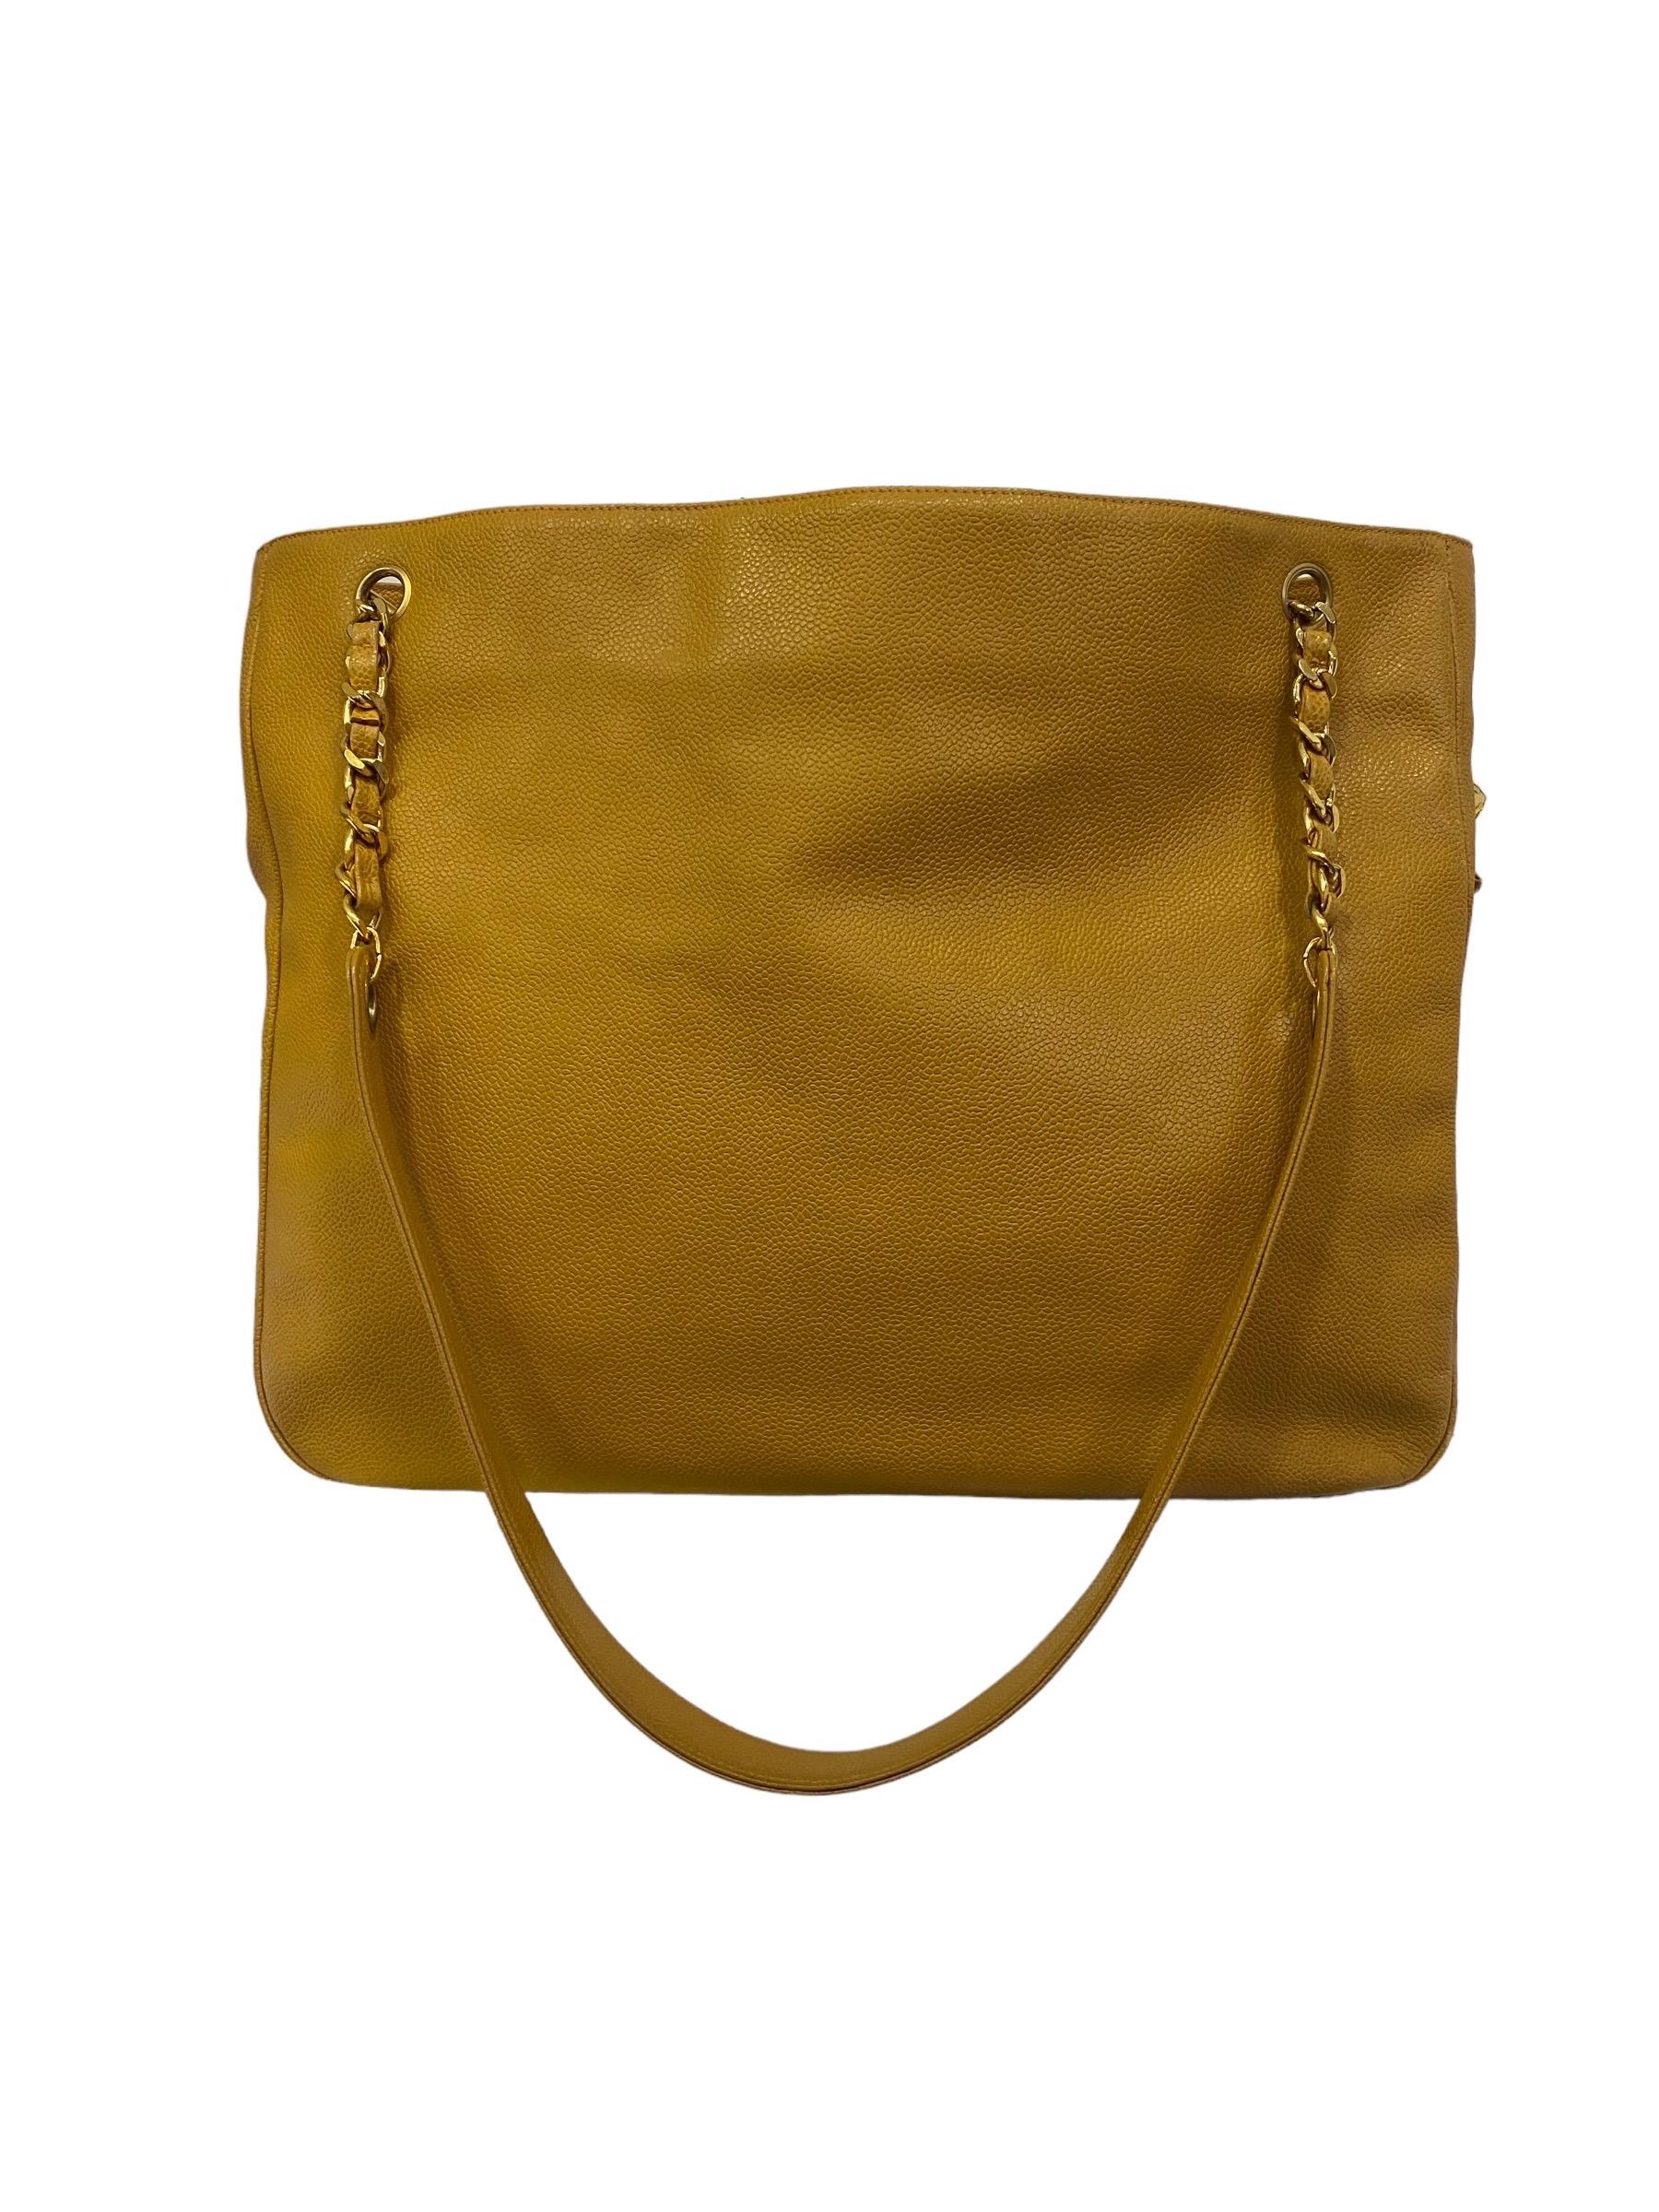 Women's Chanel Yellow Big Tote Shoulder Bag Vintage 